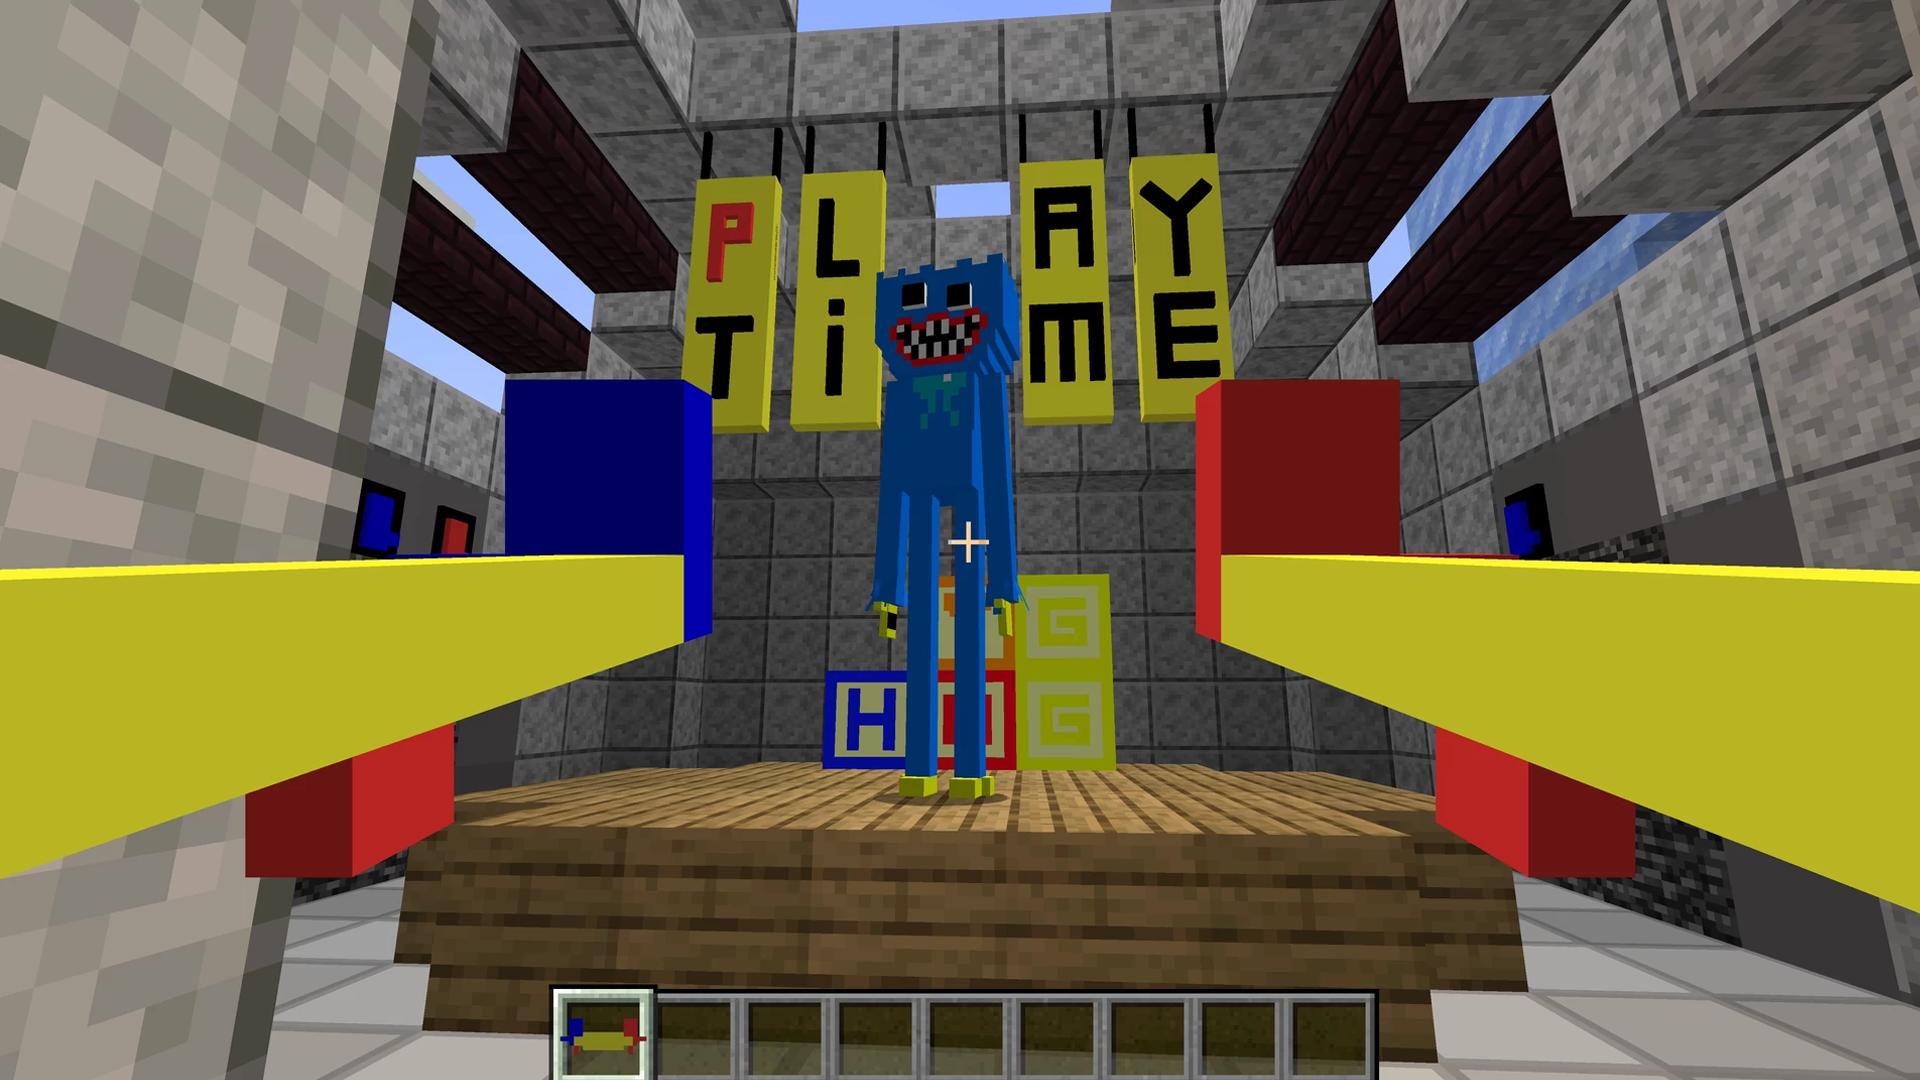 Poppy Playtime Chapter 2 Minecraft Mod